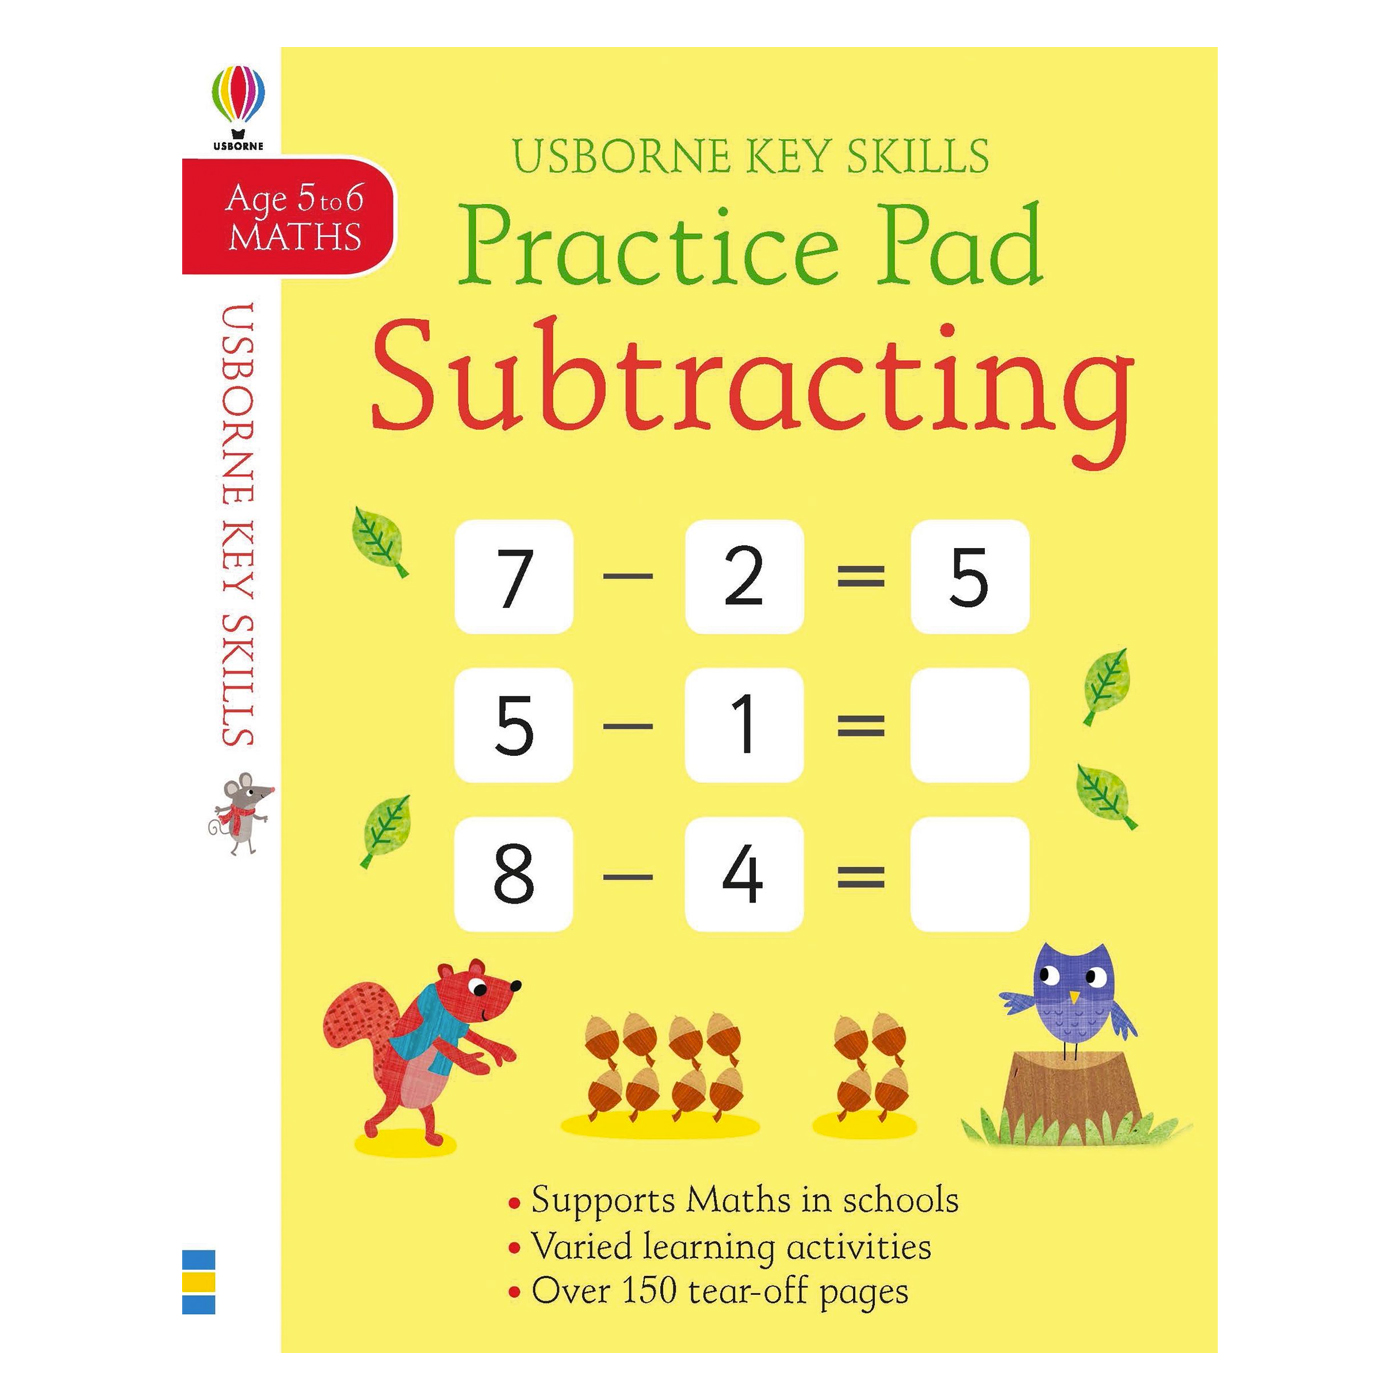 USBORNE Key Skills Subtracting Practice Pad 5-6